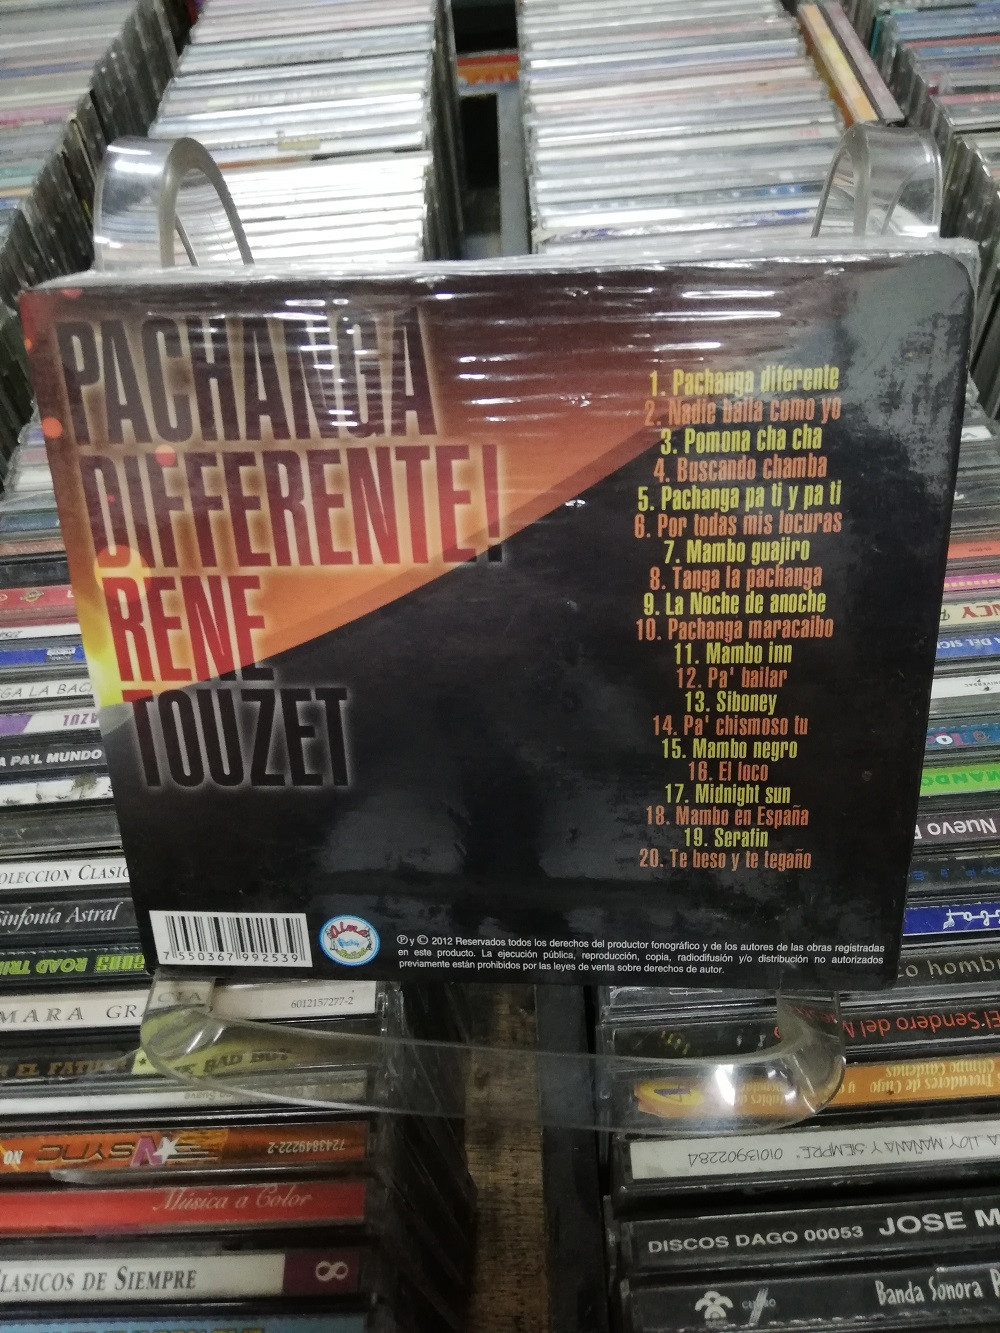 Imagen CD NUEVO RENE TOUZET - PACHANGA DIFERENTE! 2